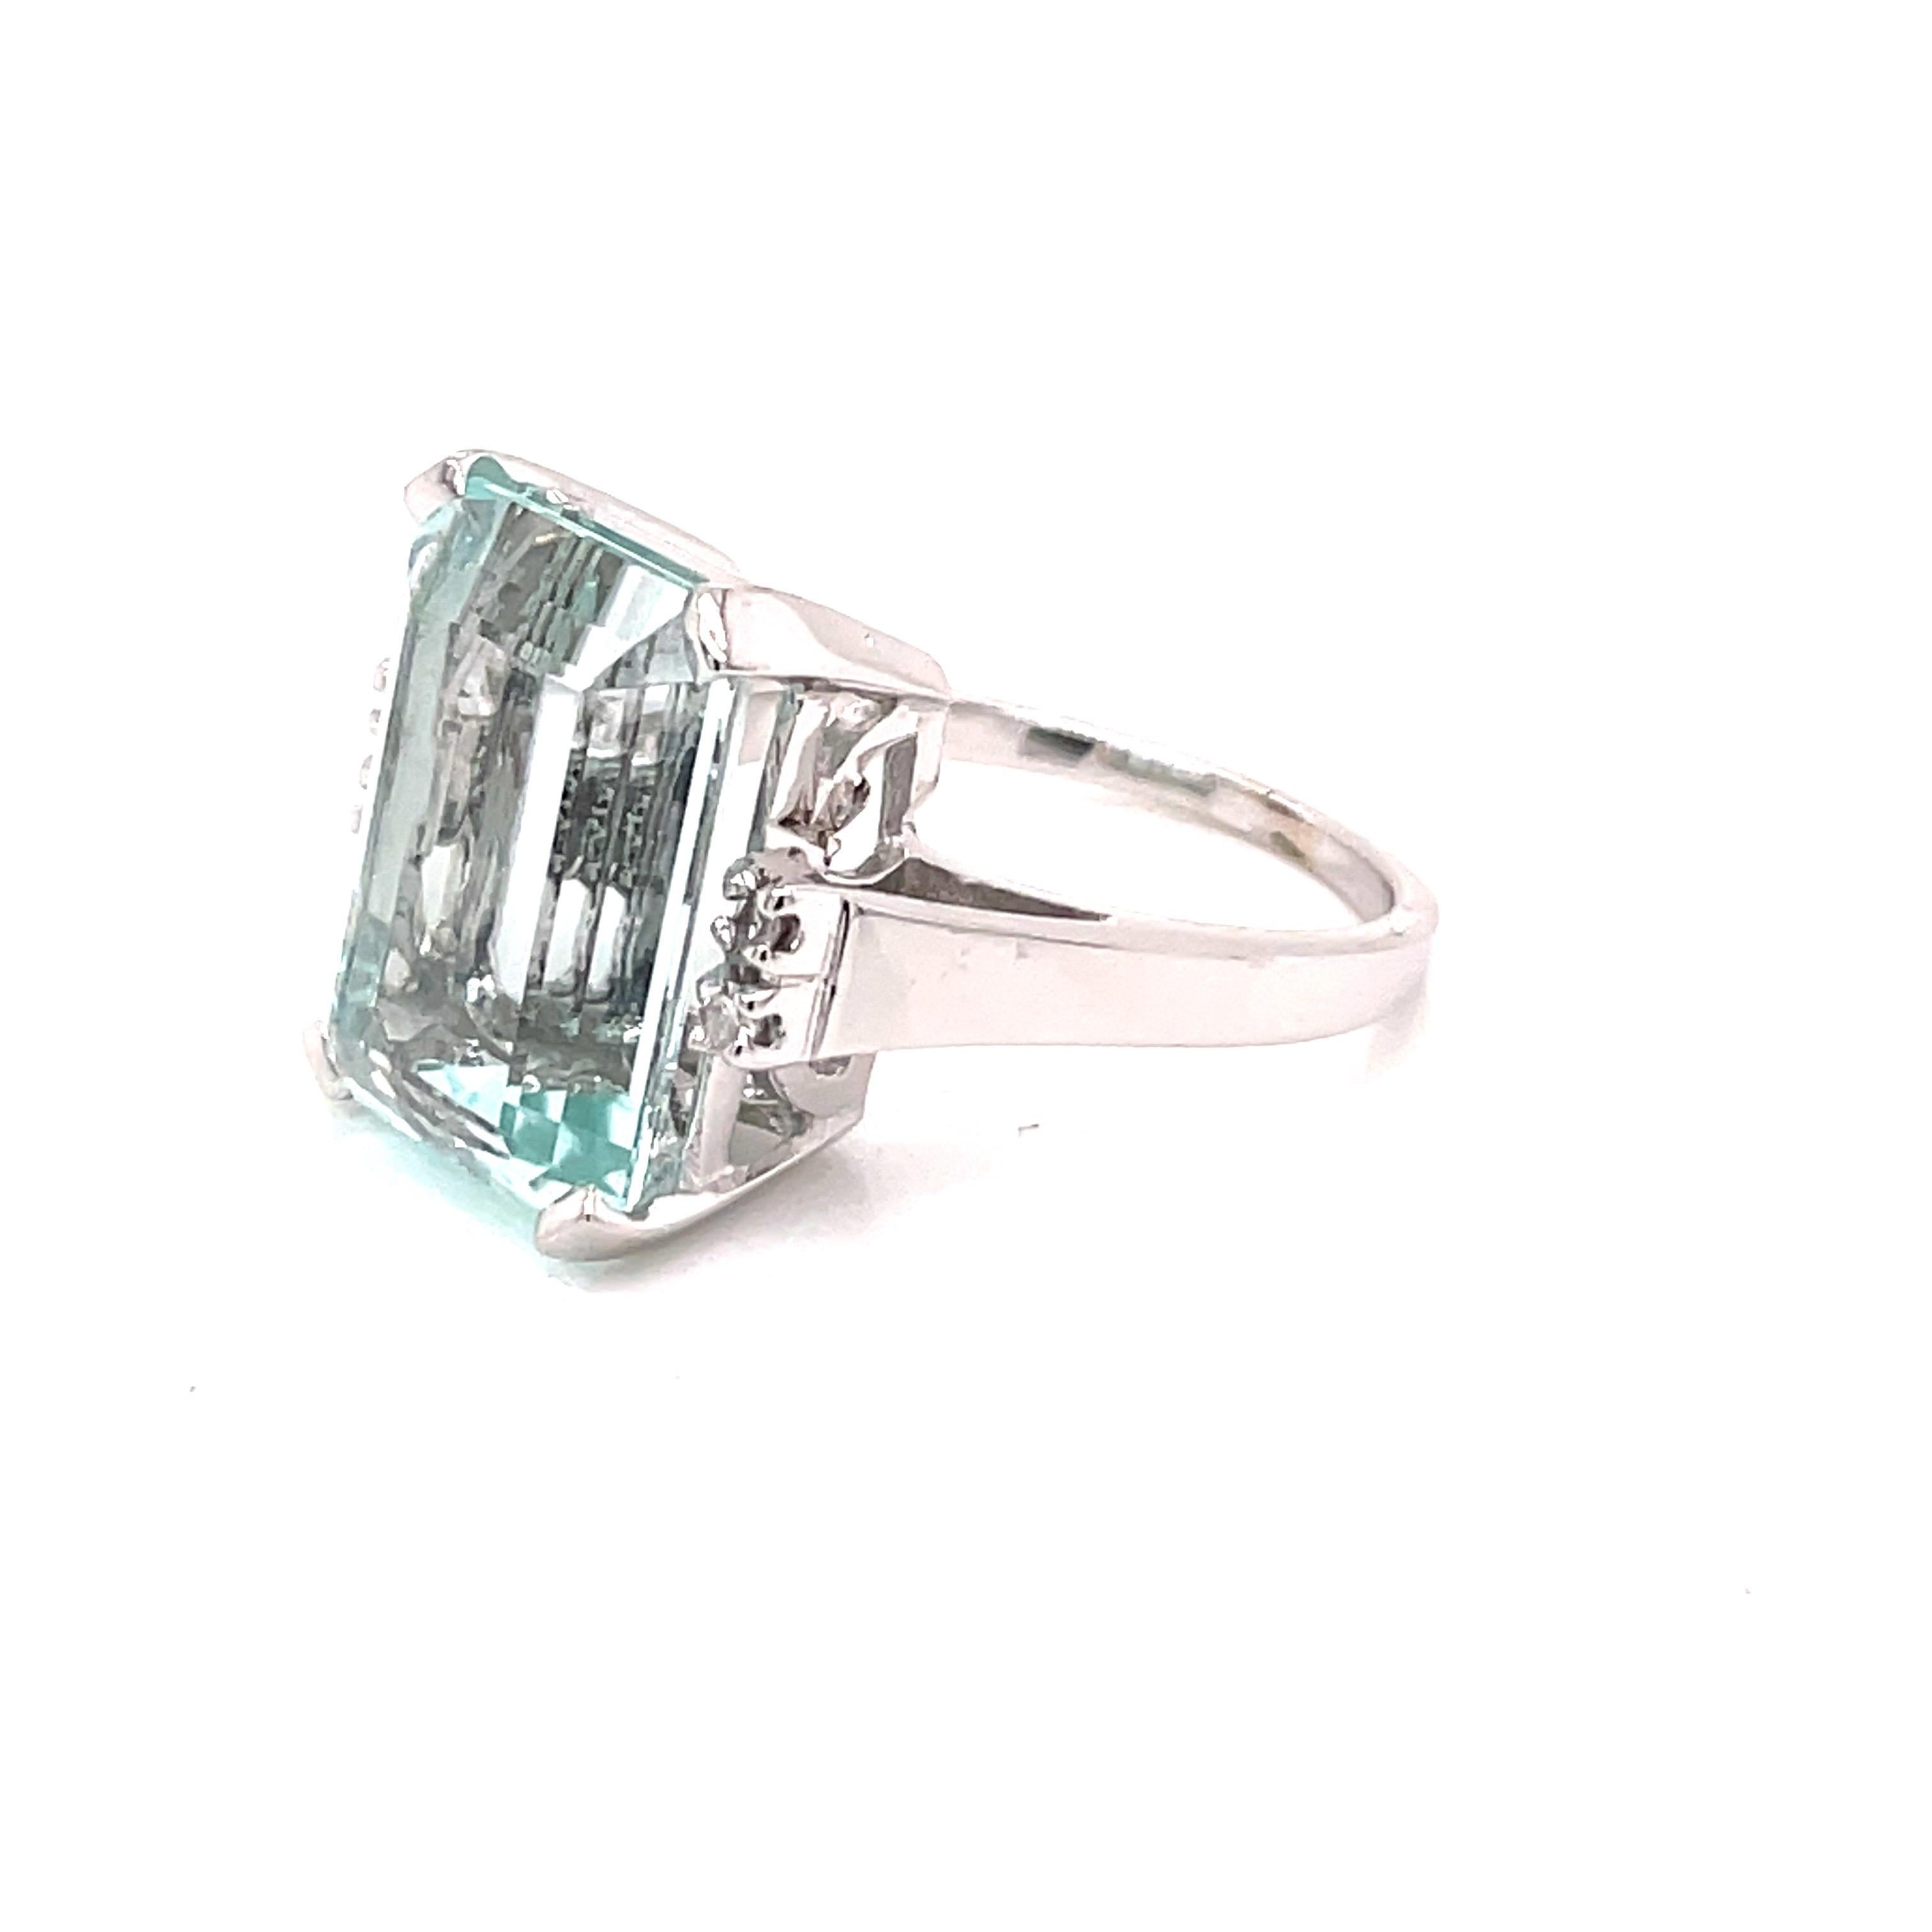 Vintage 1960's 10ct Emerald Cut Aquamarine Ring with Diamonds 1